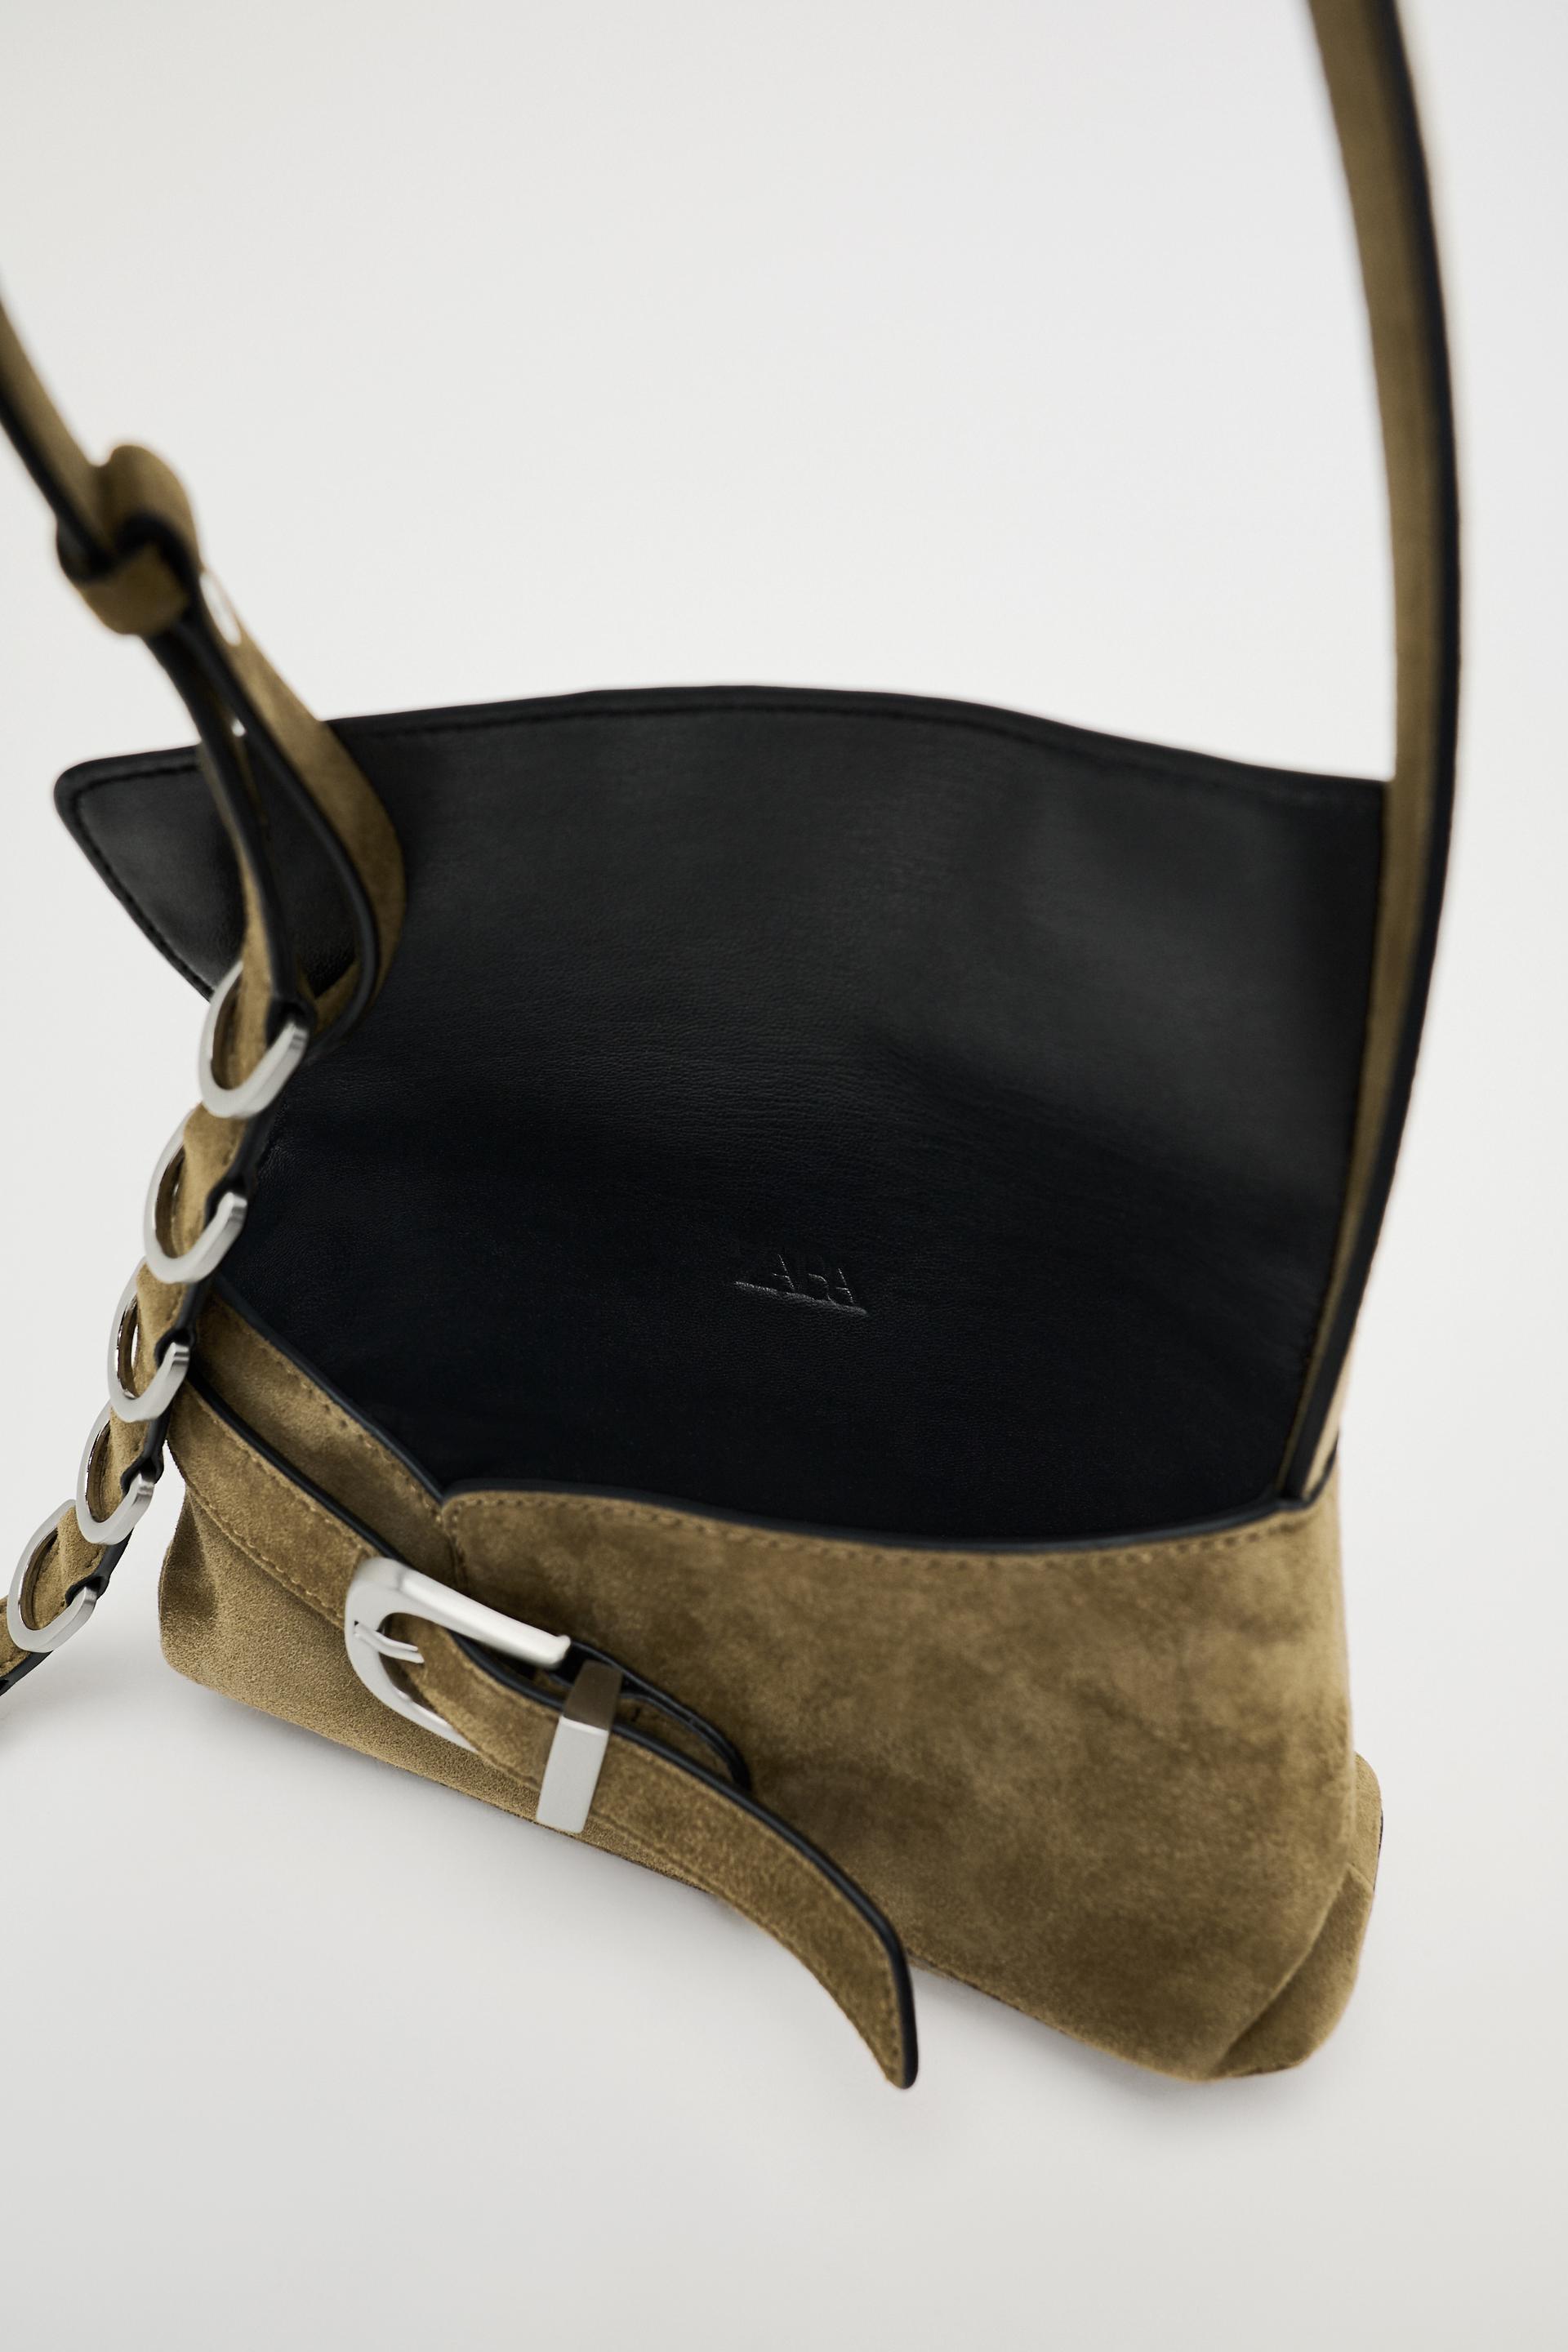 Gucci Inspired Zara Outfit & Vintage Gucci Handbag